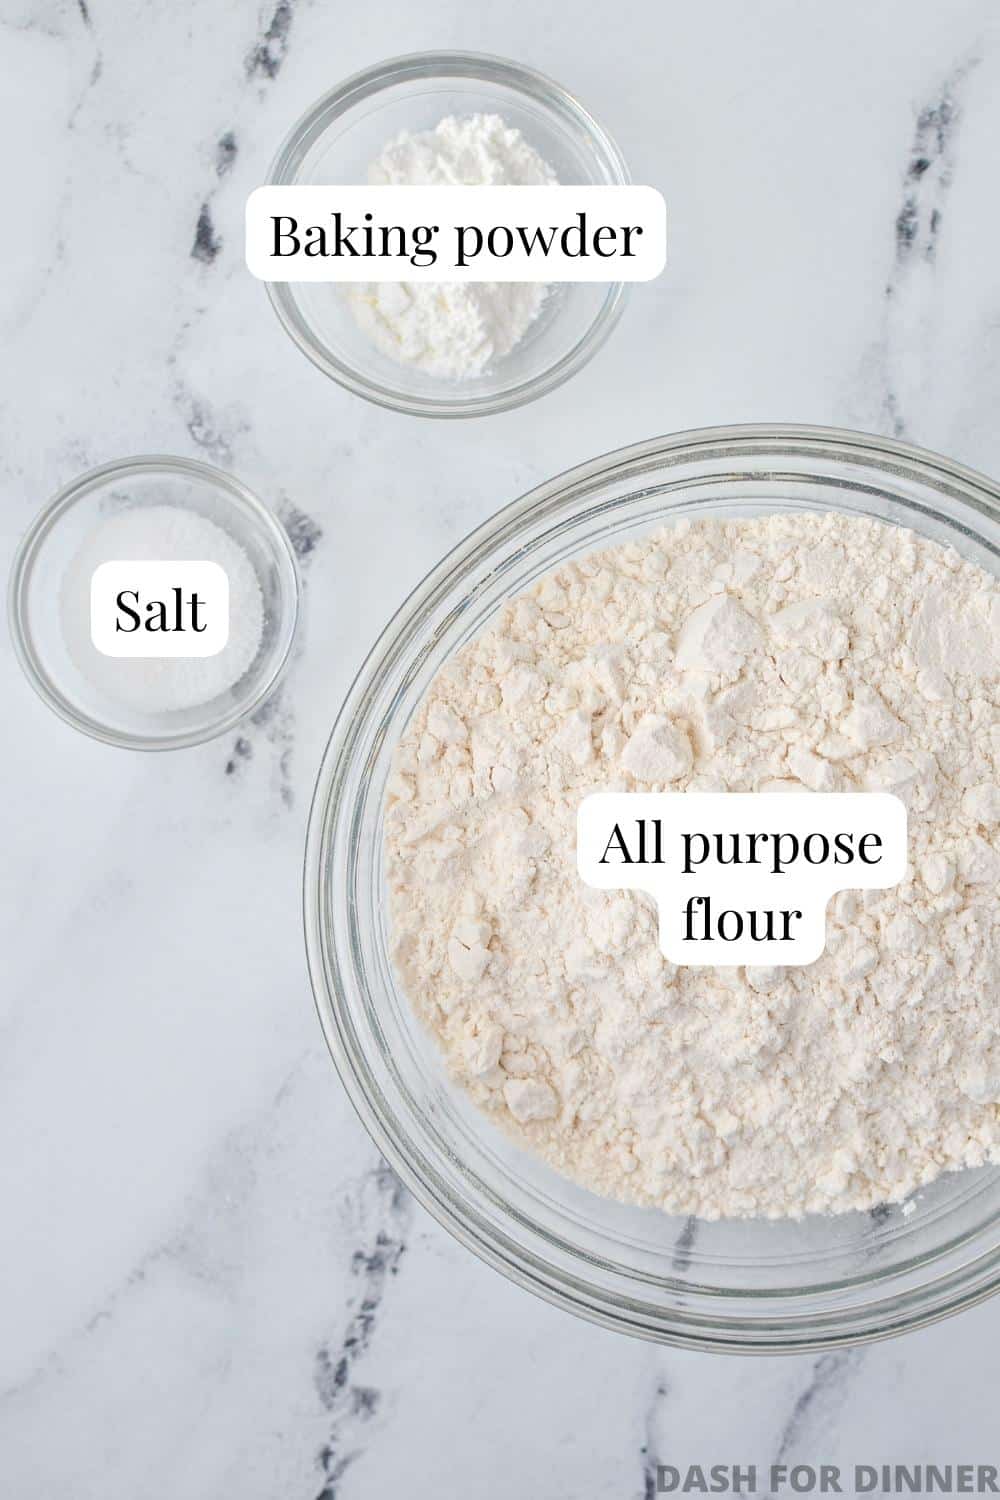 The ingredients needed to make self-rising flour: flour, baking powder, and salt.